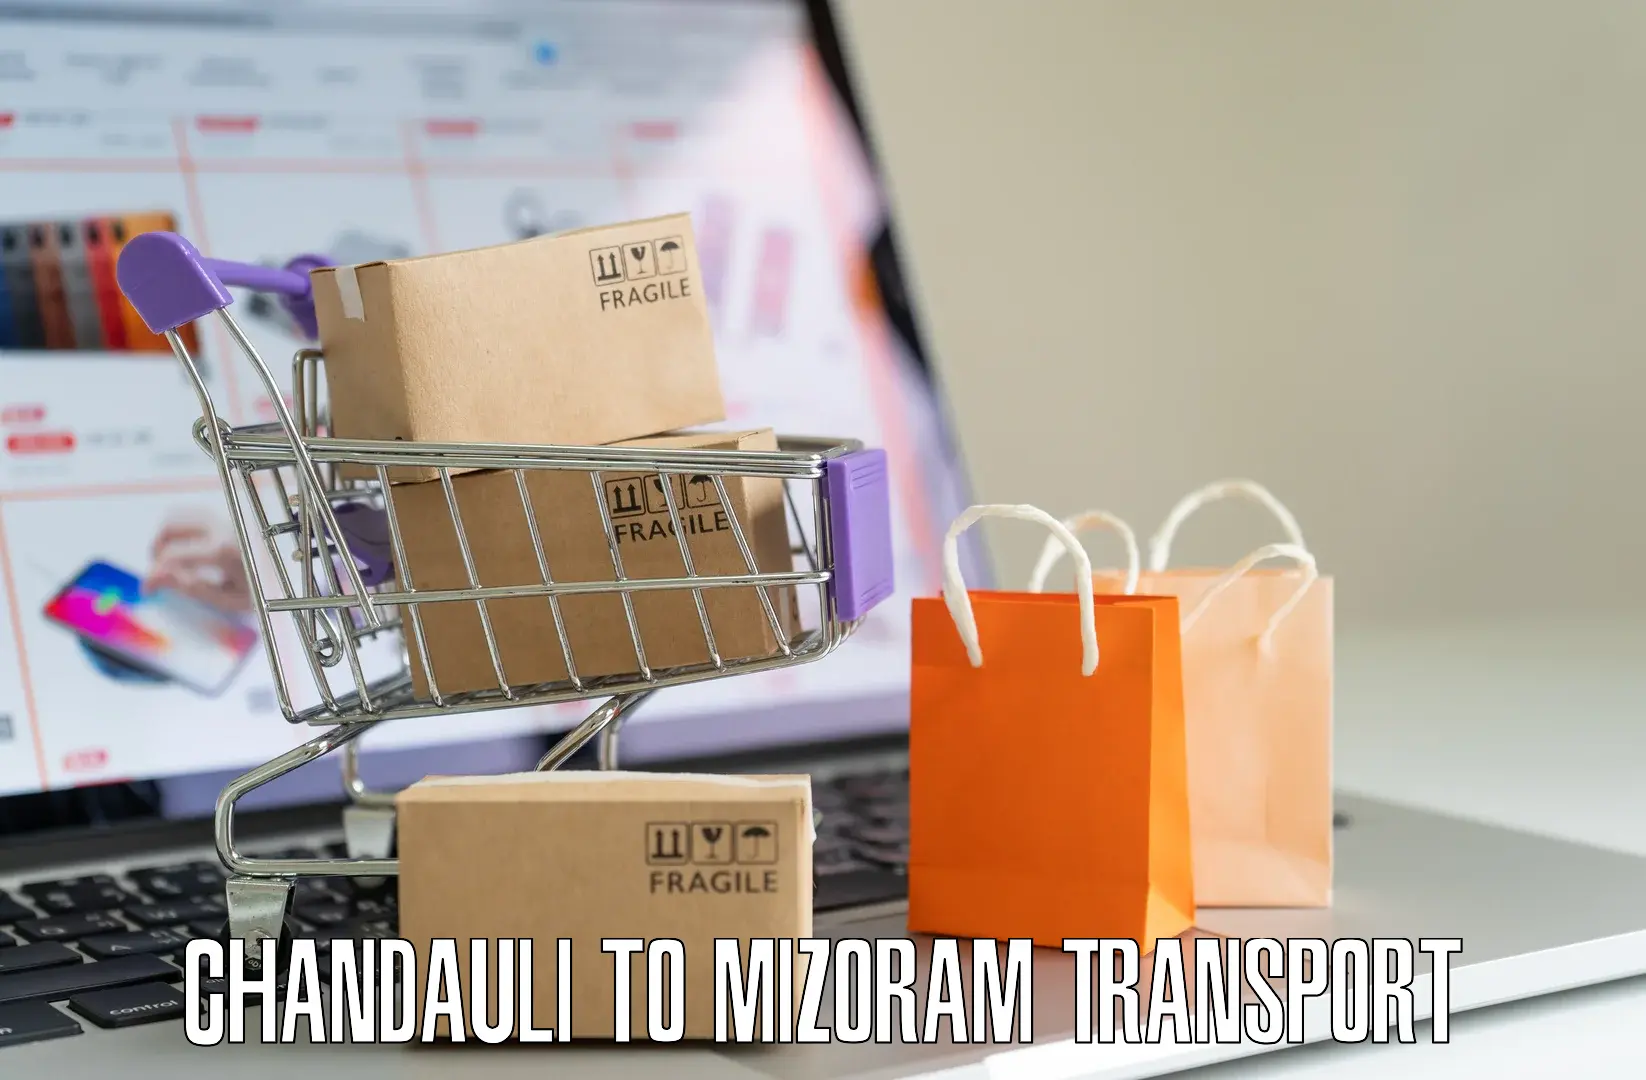 Transport bike from one state to another Chandauli to Mizoram